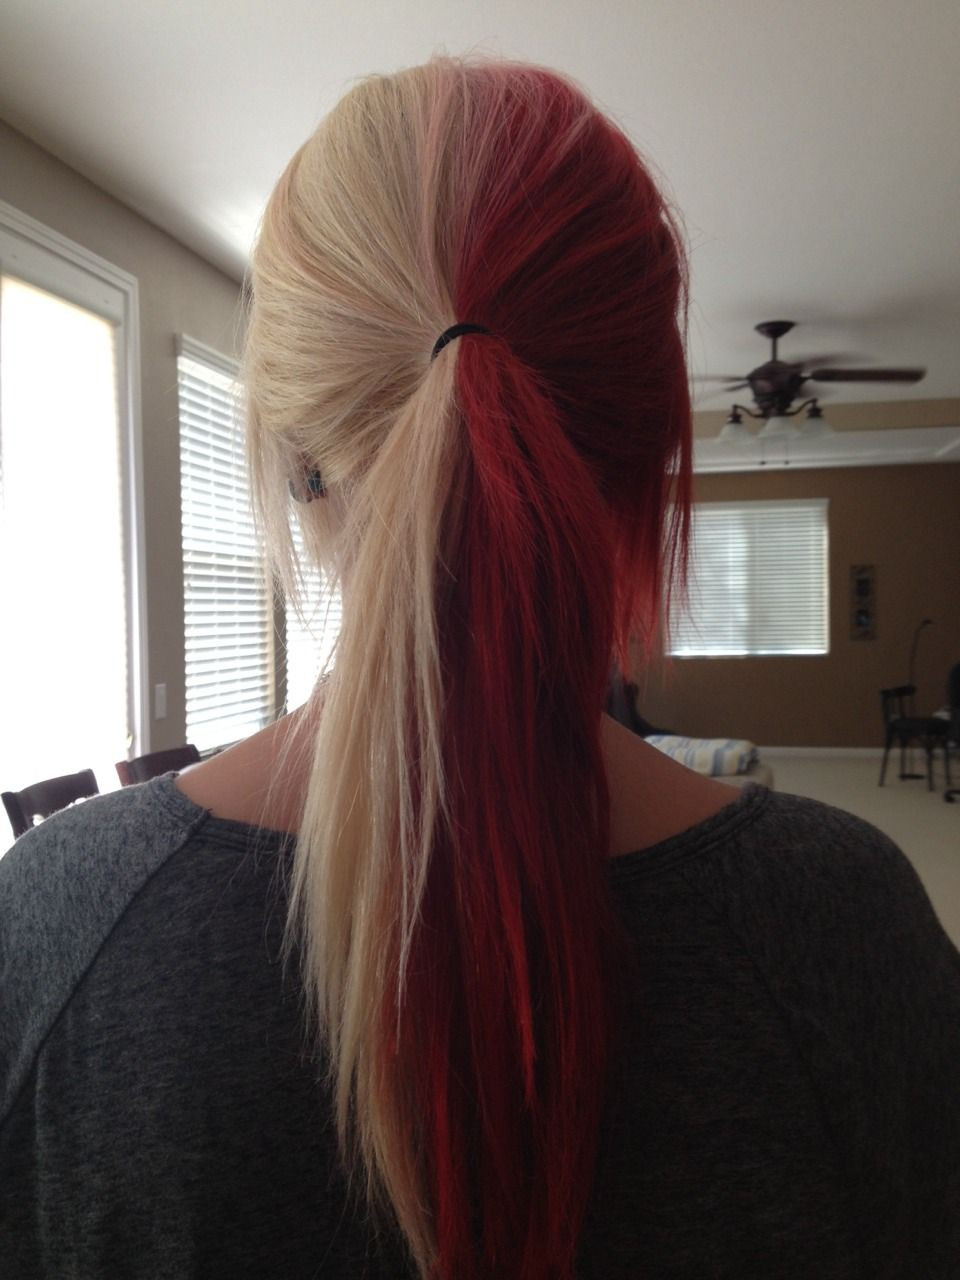 Half Black Half Red Hairstyle
 Half blonde & half red hair